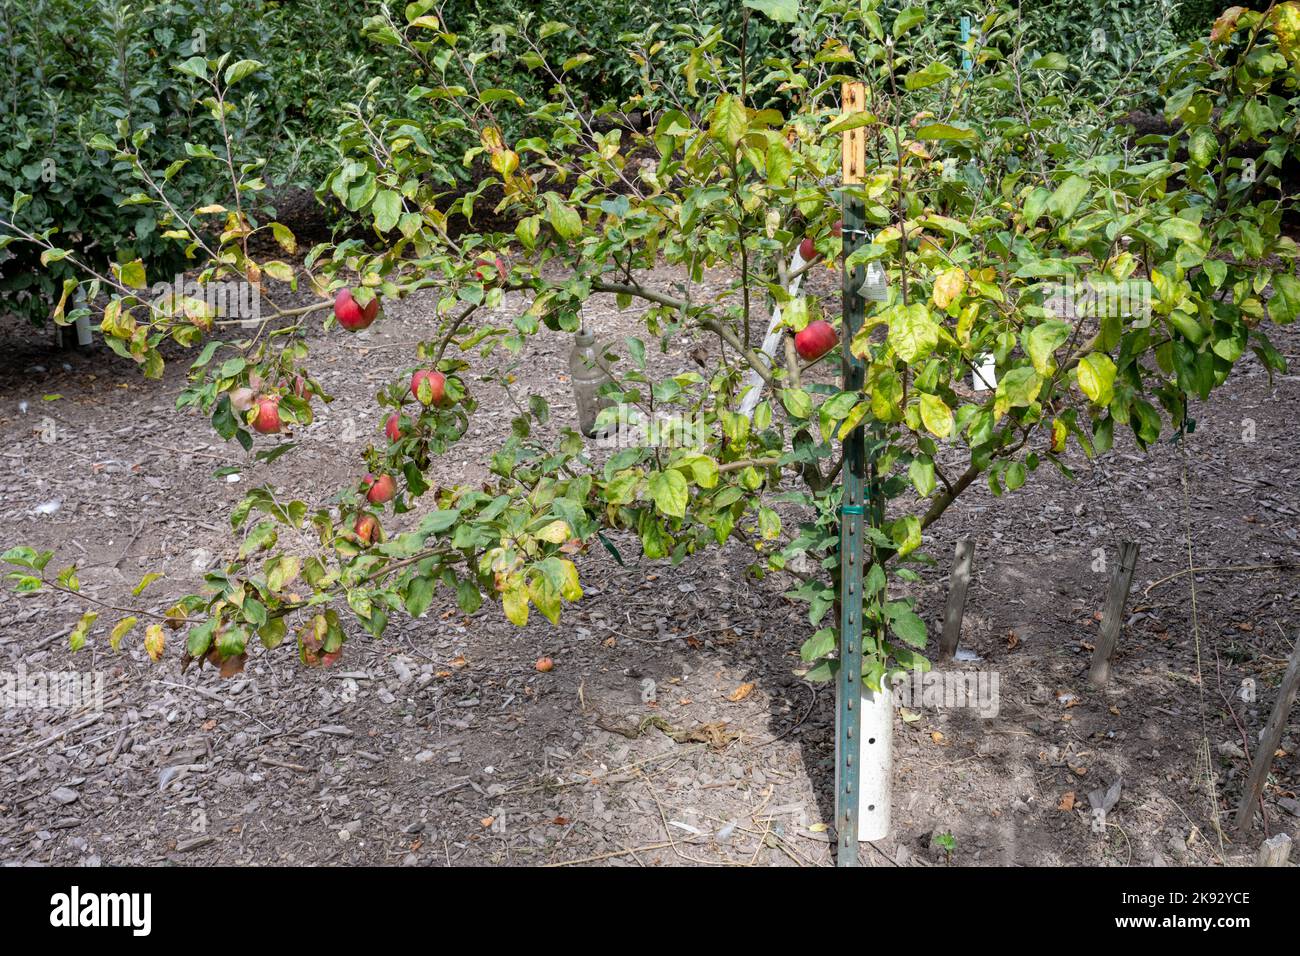 https://c8.alamy.com/comp/2K92YCE/port-townsend-washington-usa-dwarf-cosmic-crisp-apple-tree-with-ripe-apples-2K92YCE.jpg